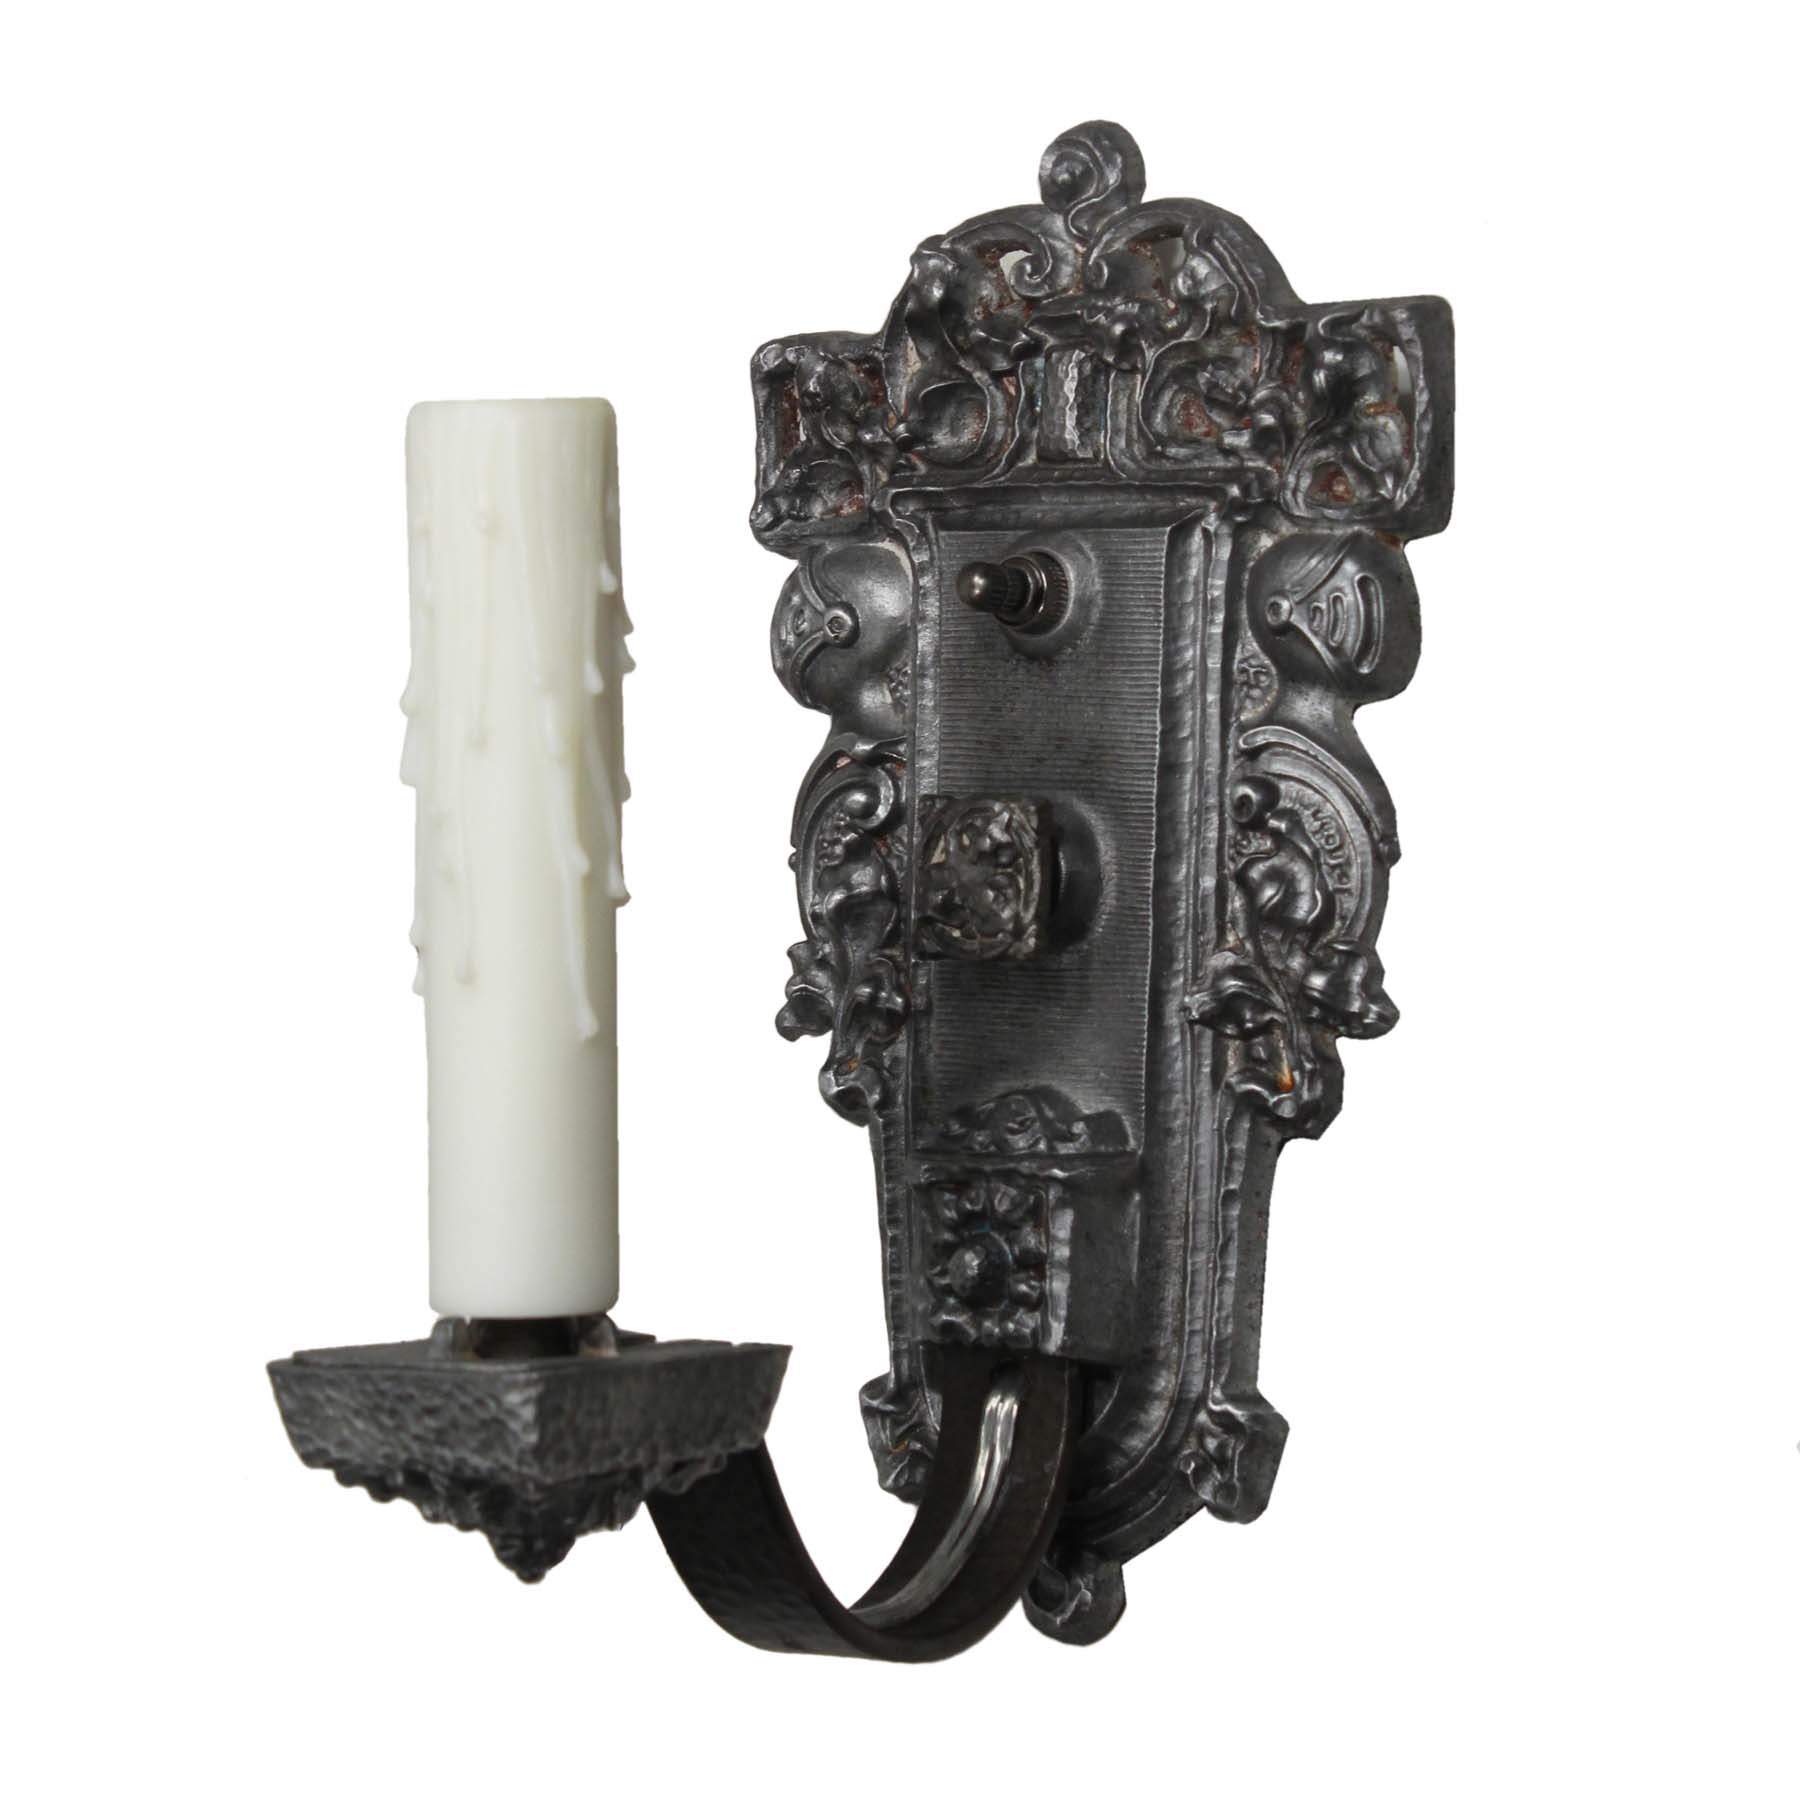 Pair of Antique Figural Gothic Revival Sconces, Riddle Co.-71285